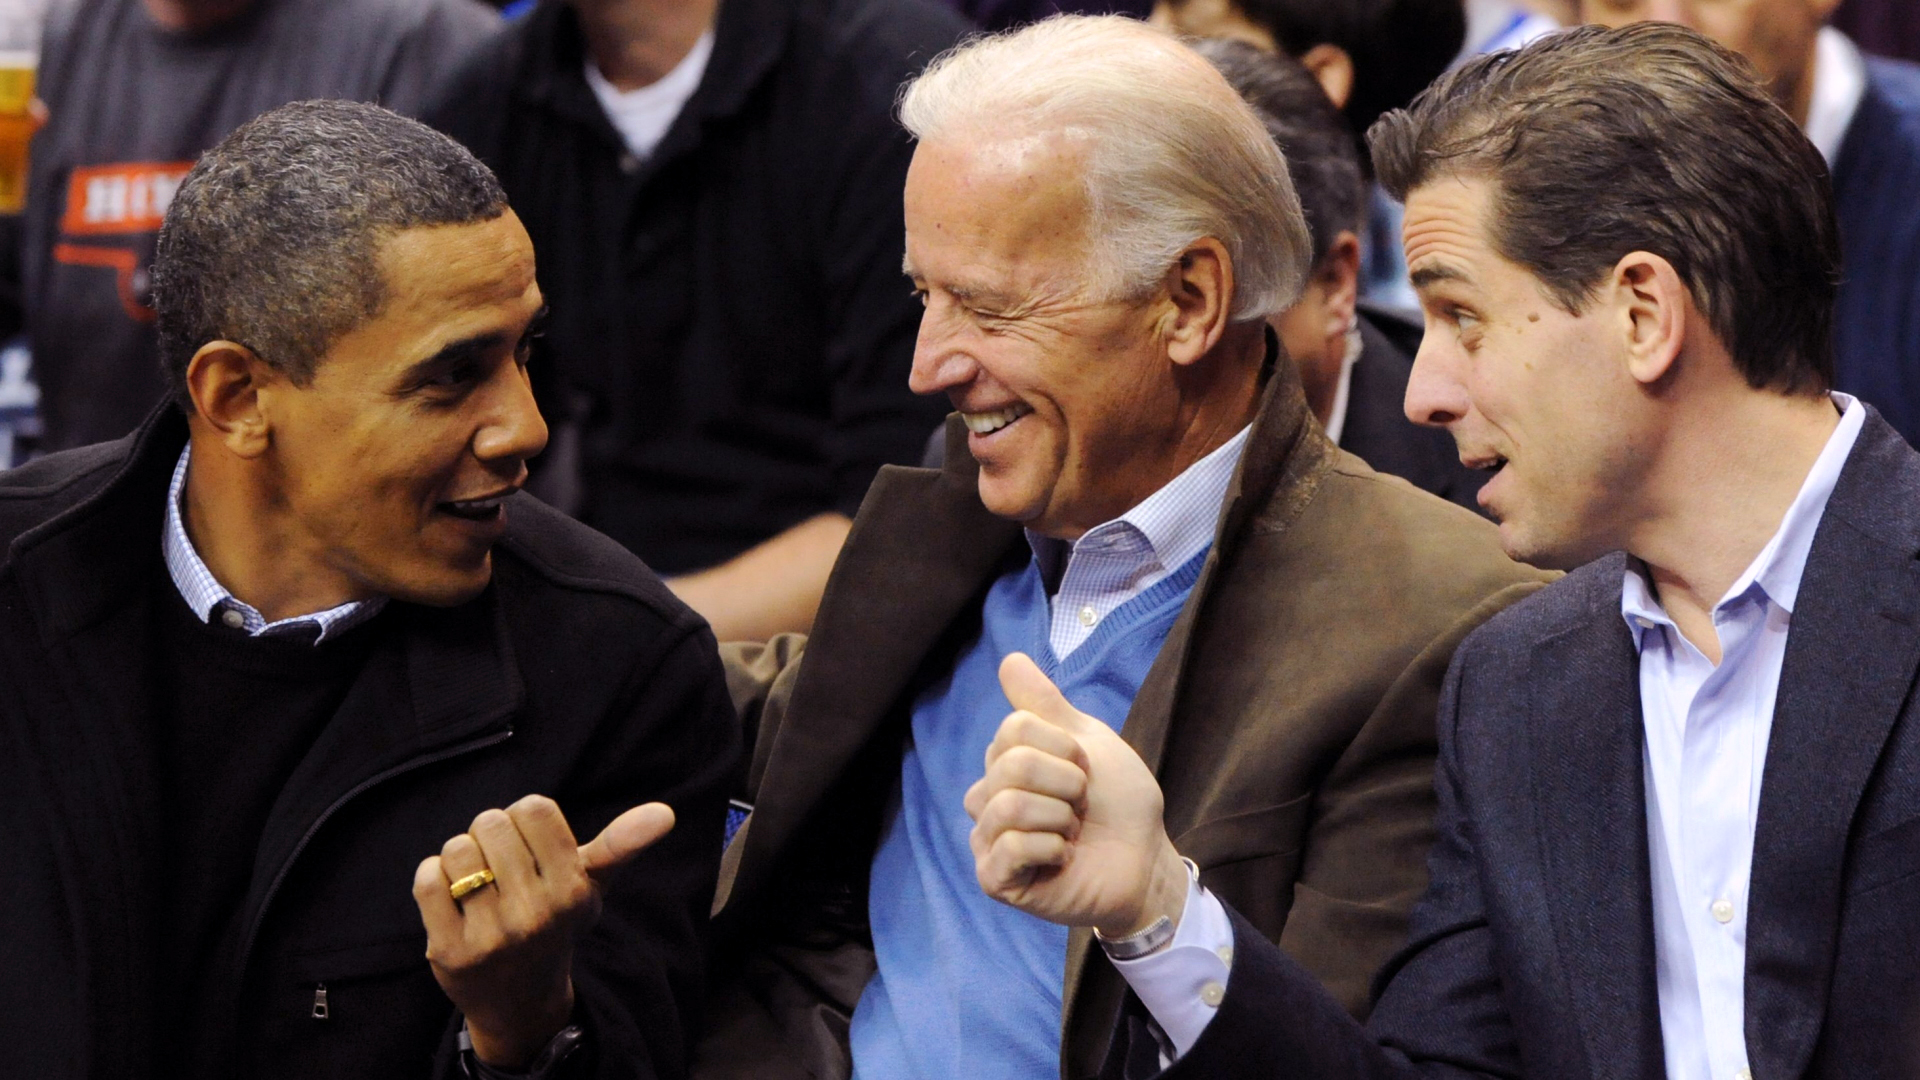 Barack Obama mit Joe und Hunter Biden | ALEXIS C GLENN/POOL/EPA-EFE/REX